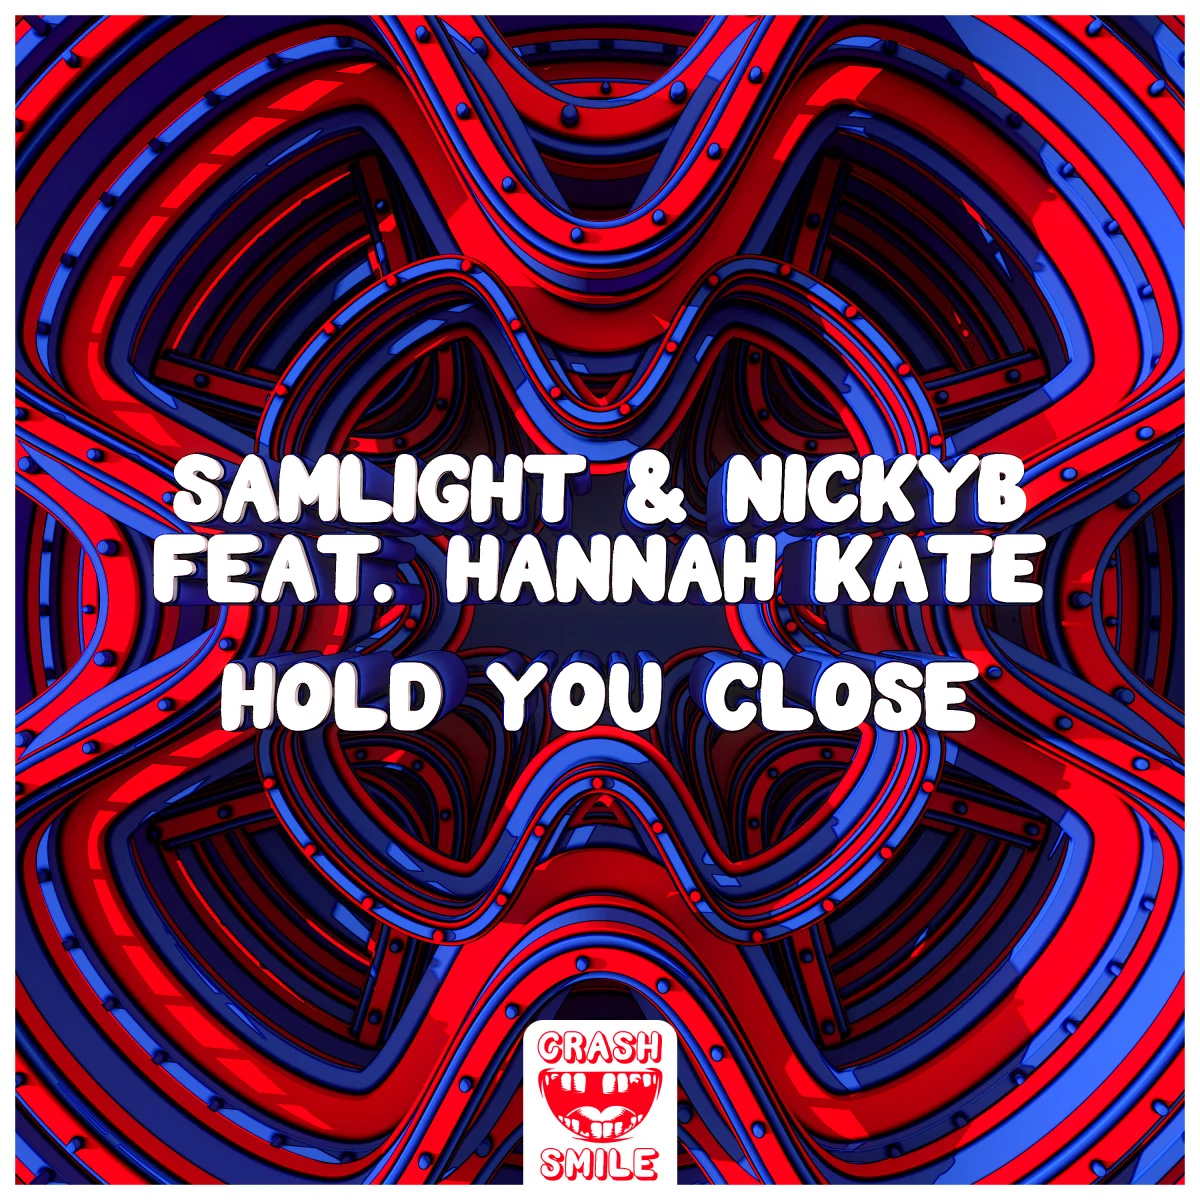 Hold You Close - Samlight⁠ & NickyB⁠ feat. hannah kate⁠ 